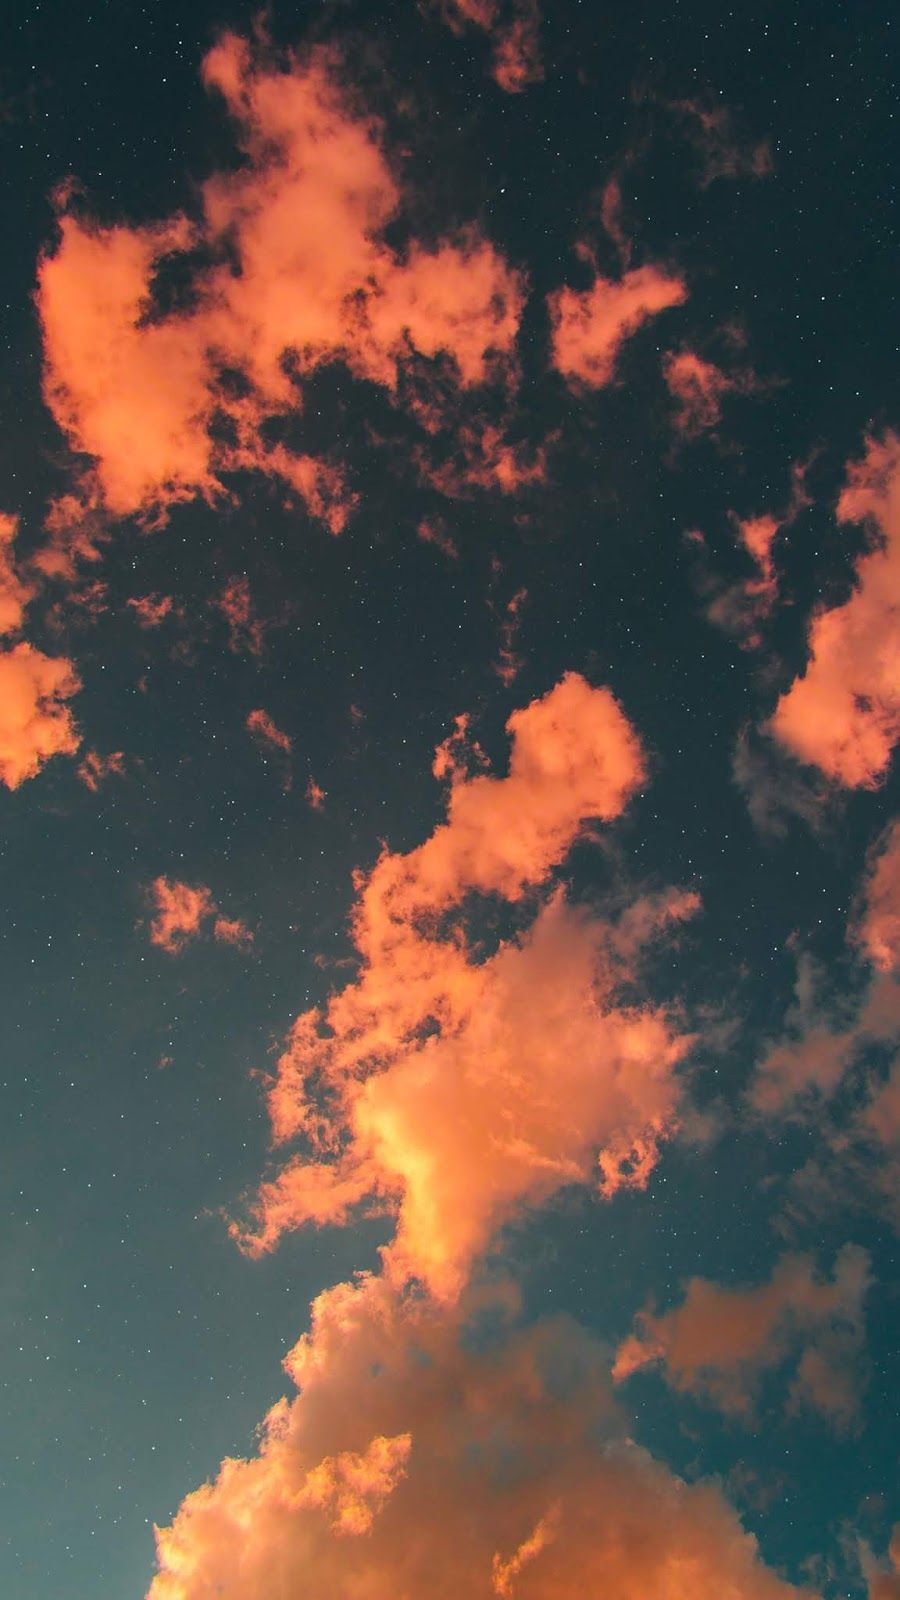  Mystisch Hintergrundbild 900x1600. aesthetic night sky #wallpaper #iphone #android #background #followme. Sky aesthetic, Night sky wallpaper, Beautiful wallpaper background